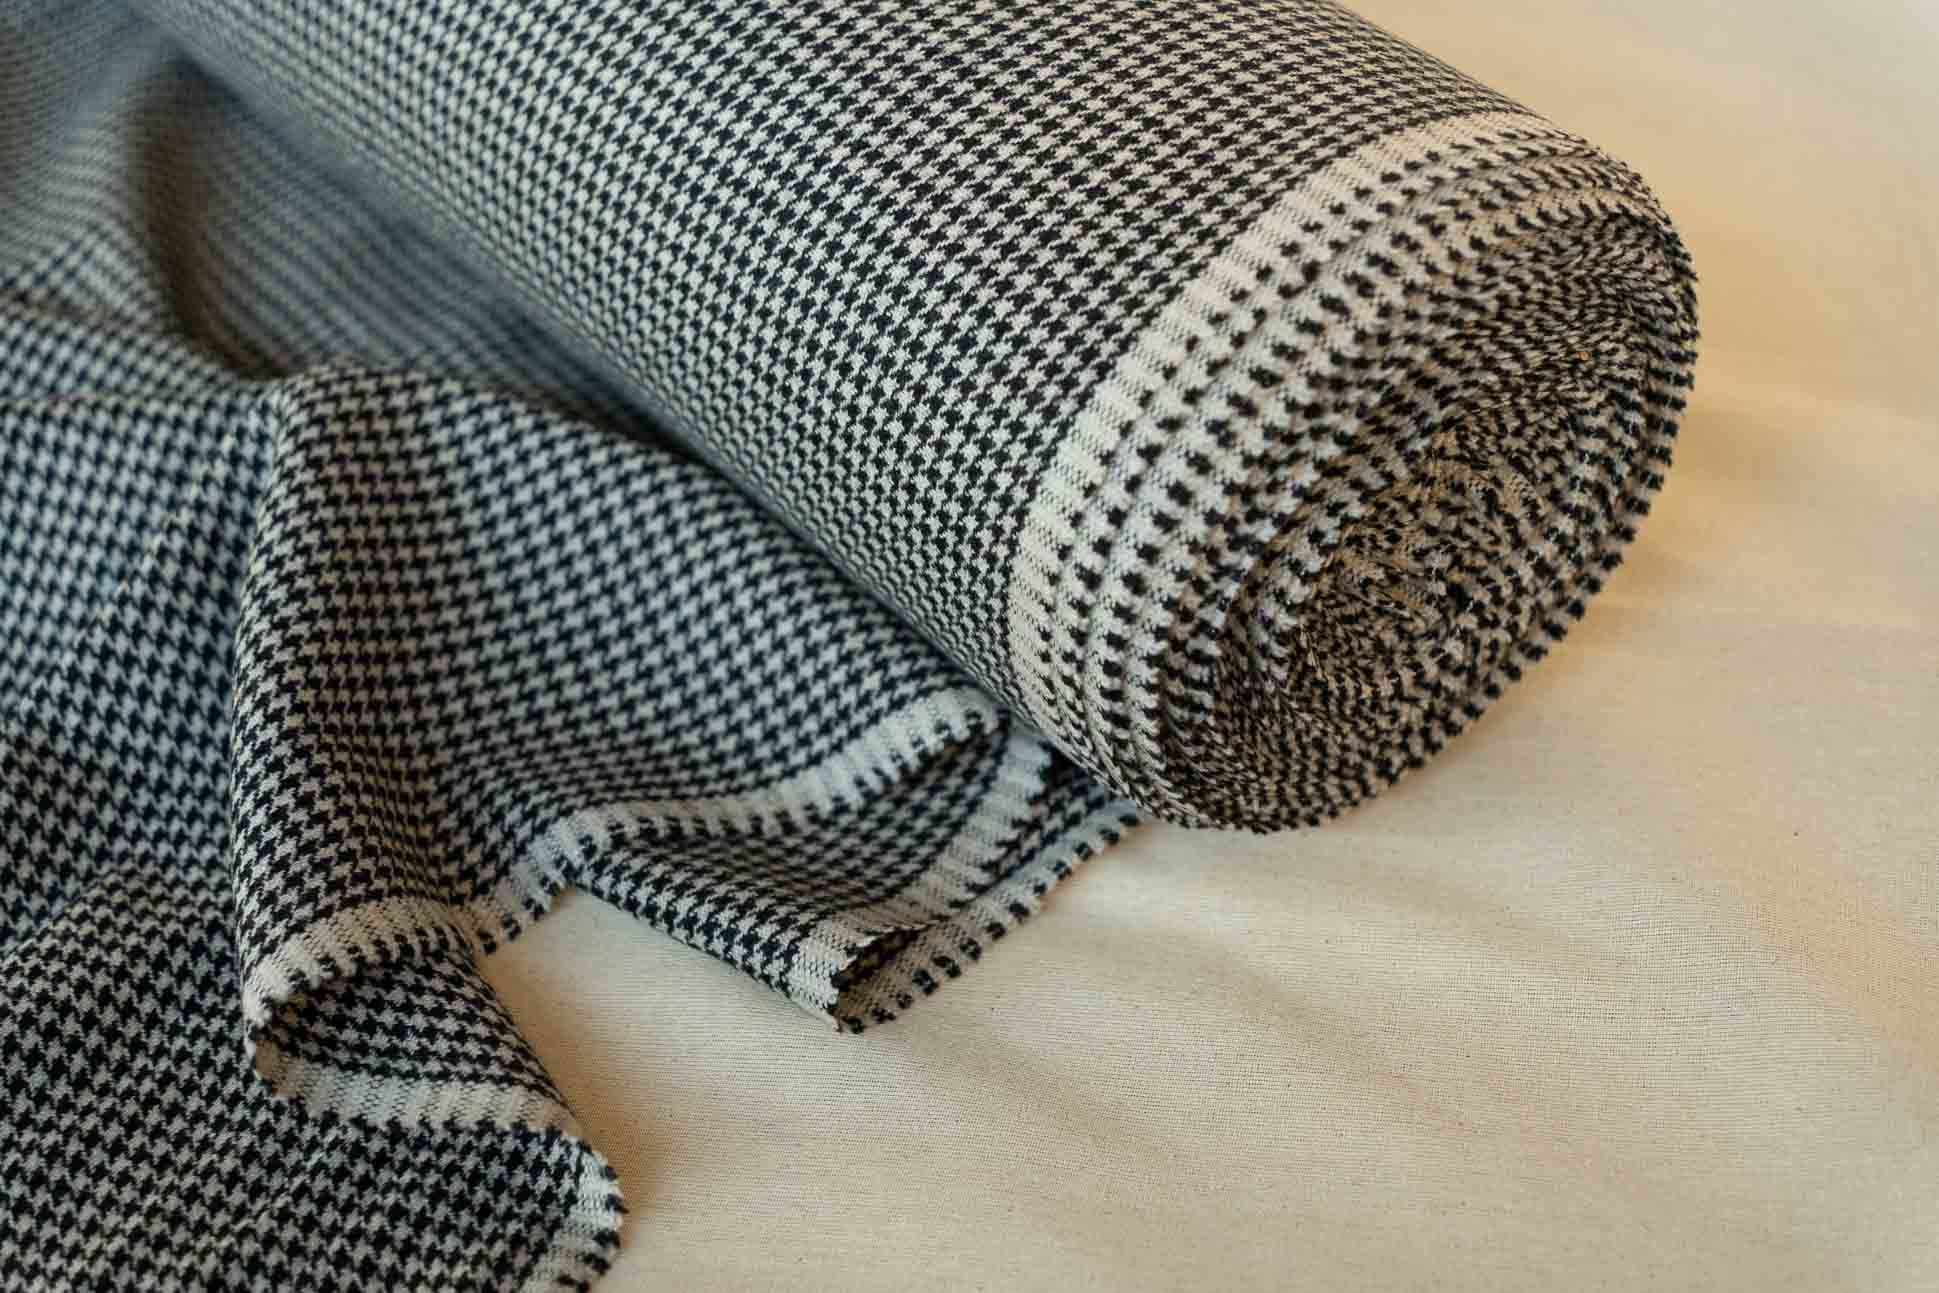 Black White Checks Tweed Wool Fabric